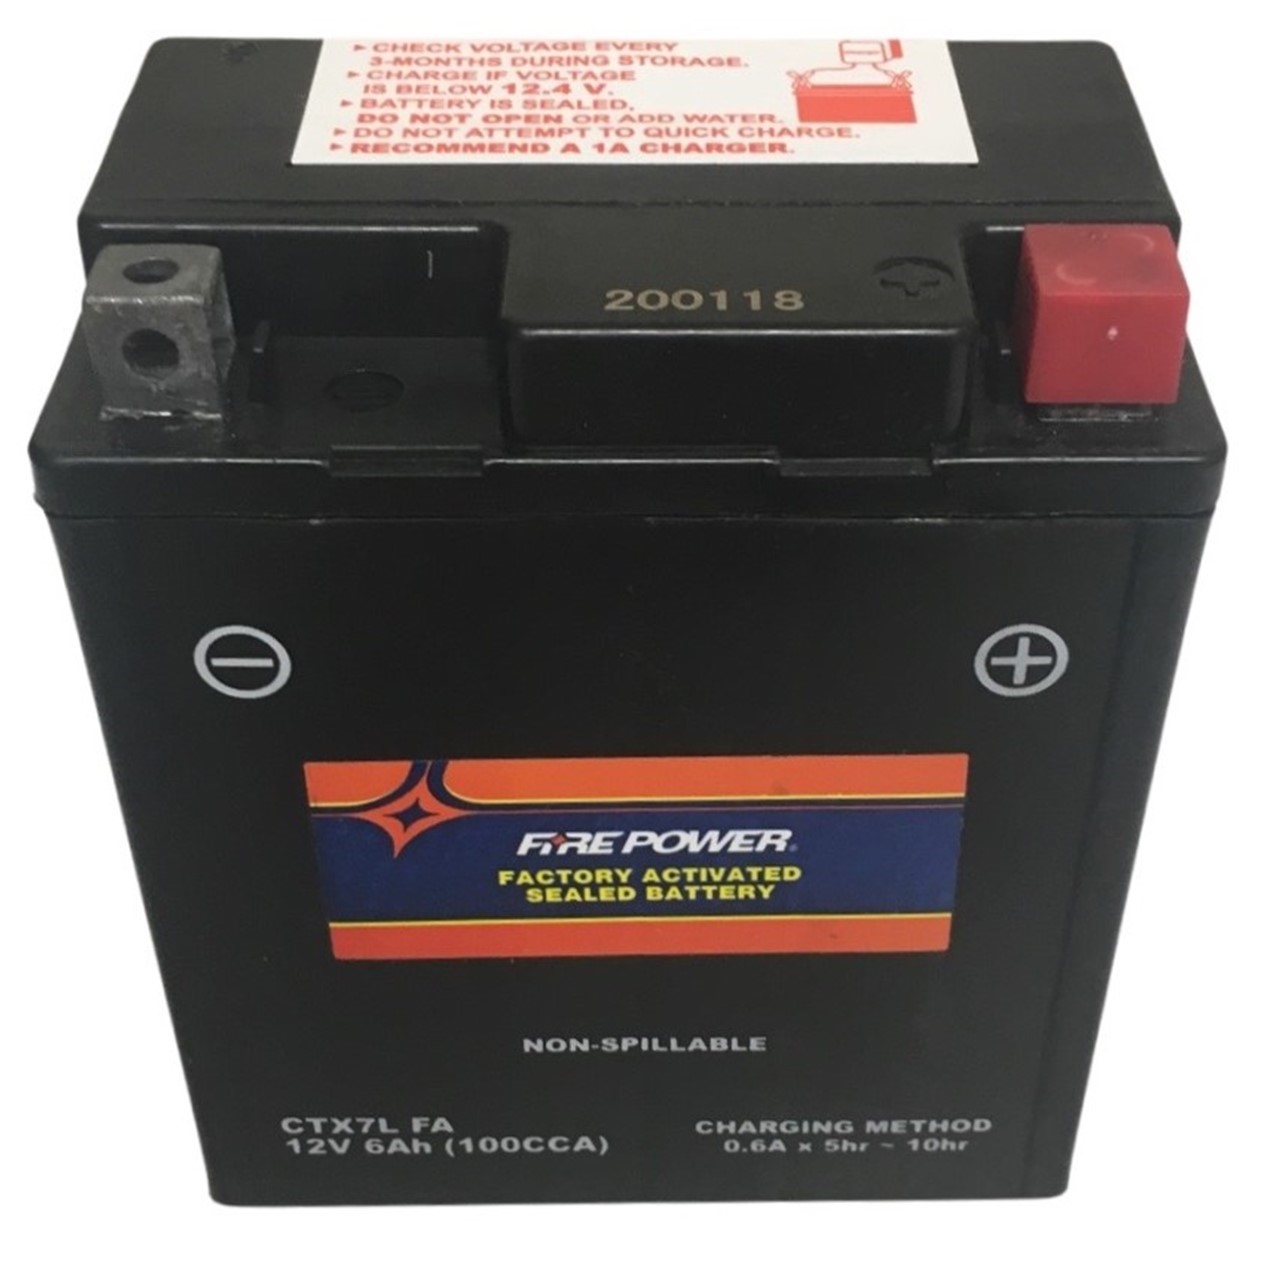 CTX7L FA Fire Power Battery Sealed Maintenance Free L=4 1/2" W=2 3/4" H=5 1/8"